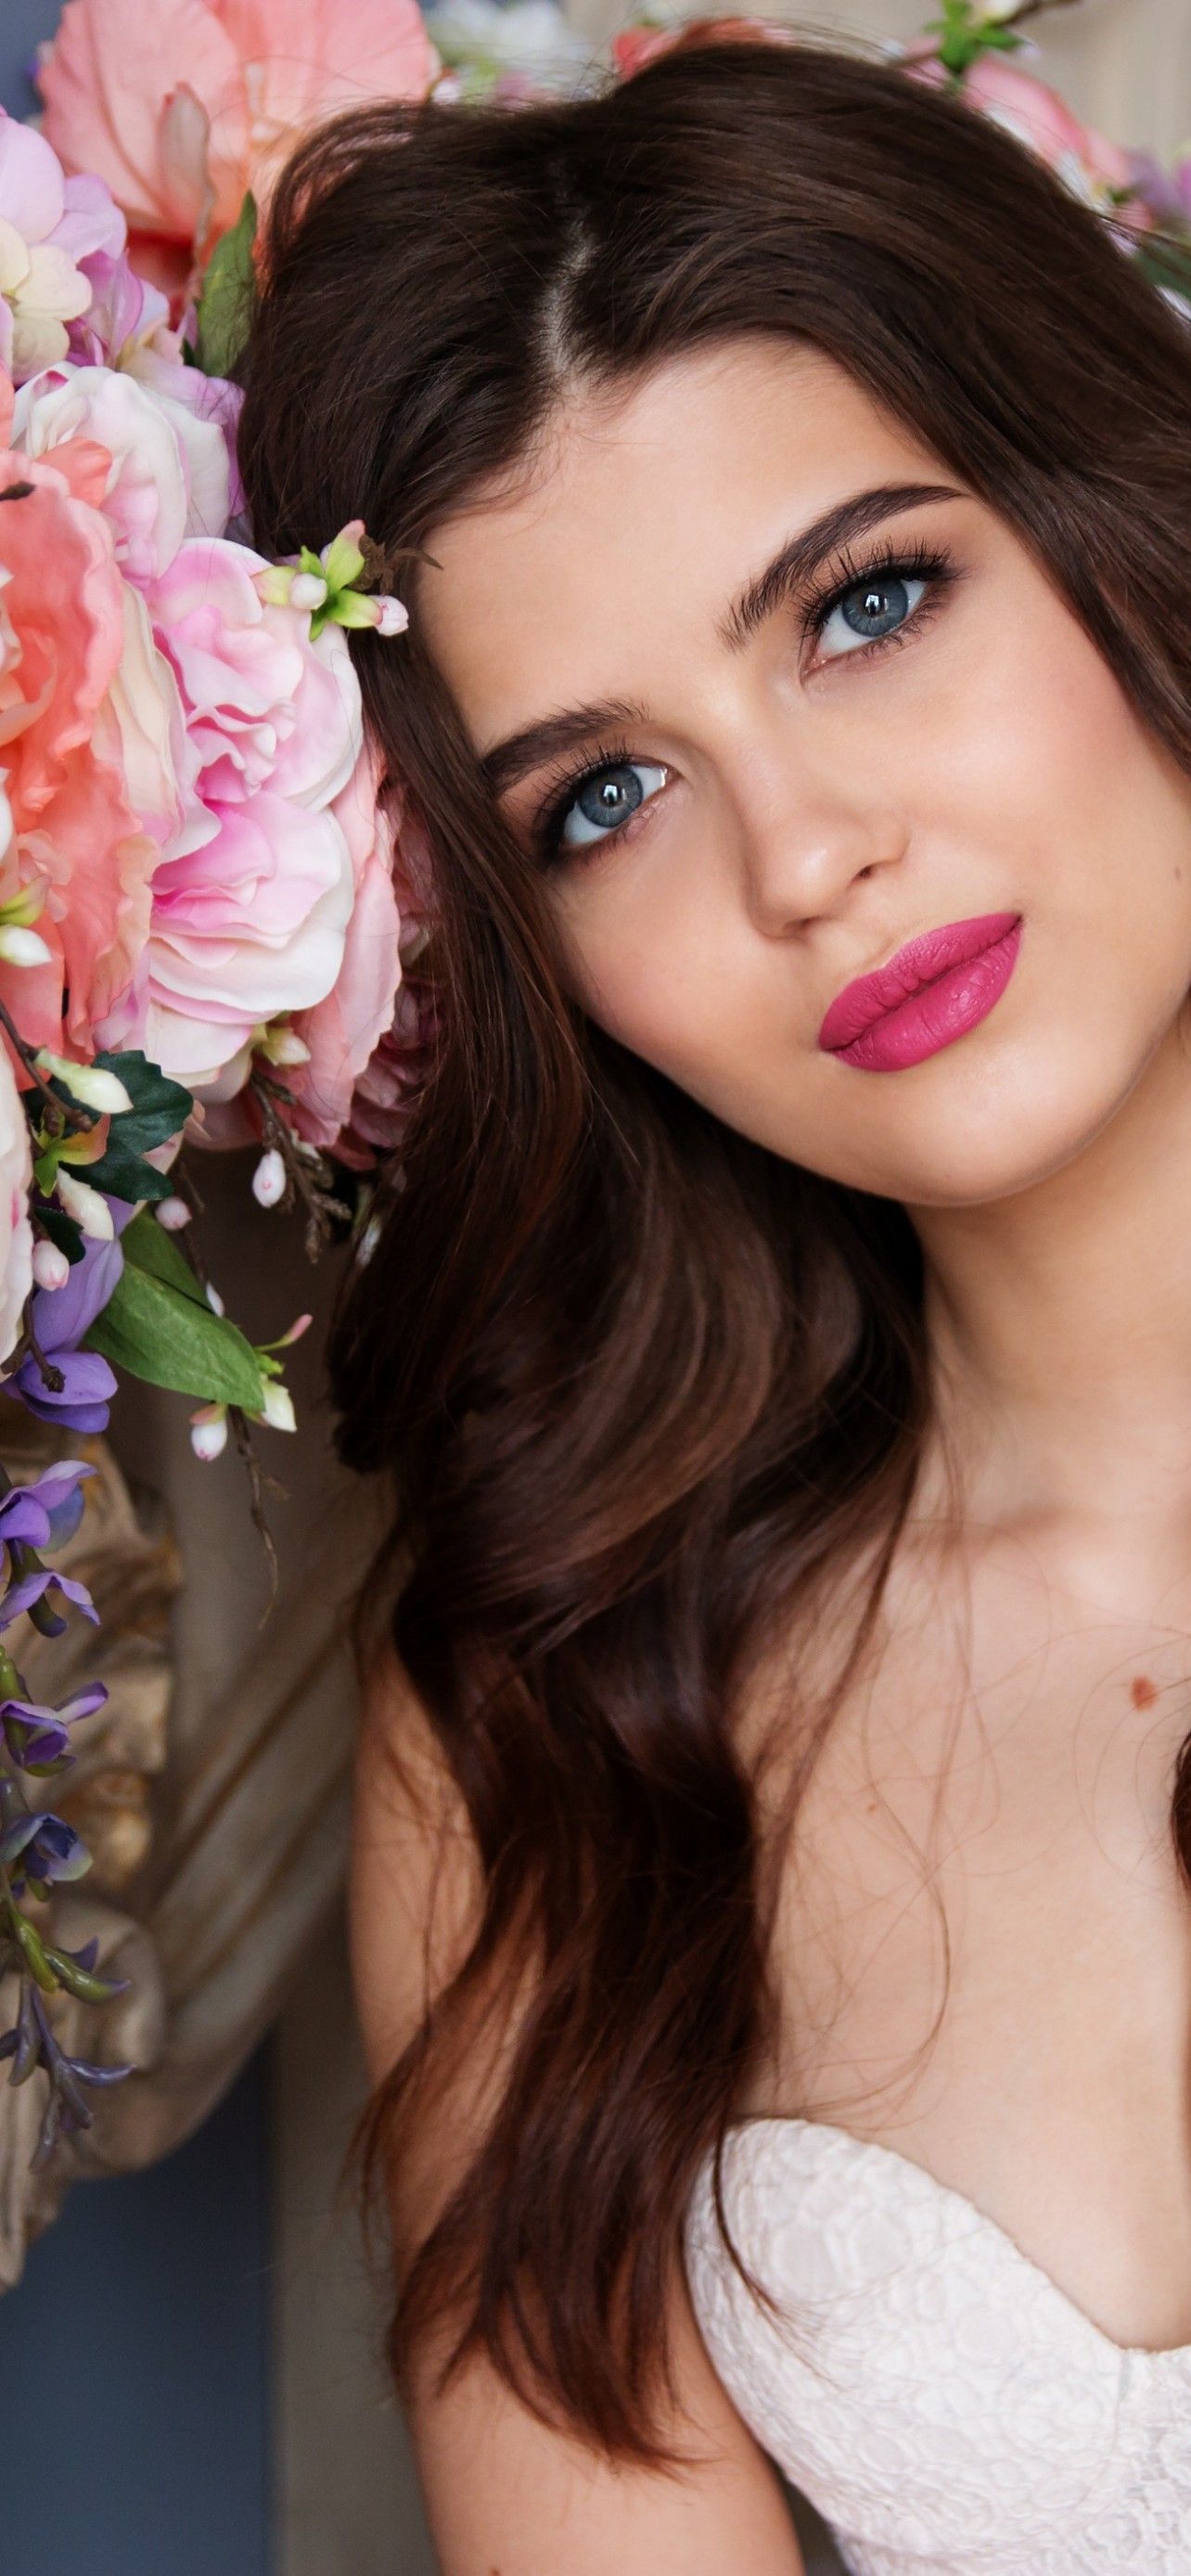 Beautiful girl 4K Wallpaper, Fashion, Makeup, Flowers, Portrait, People